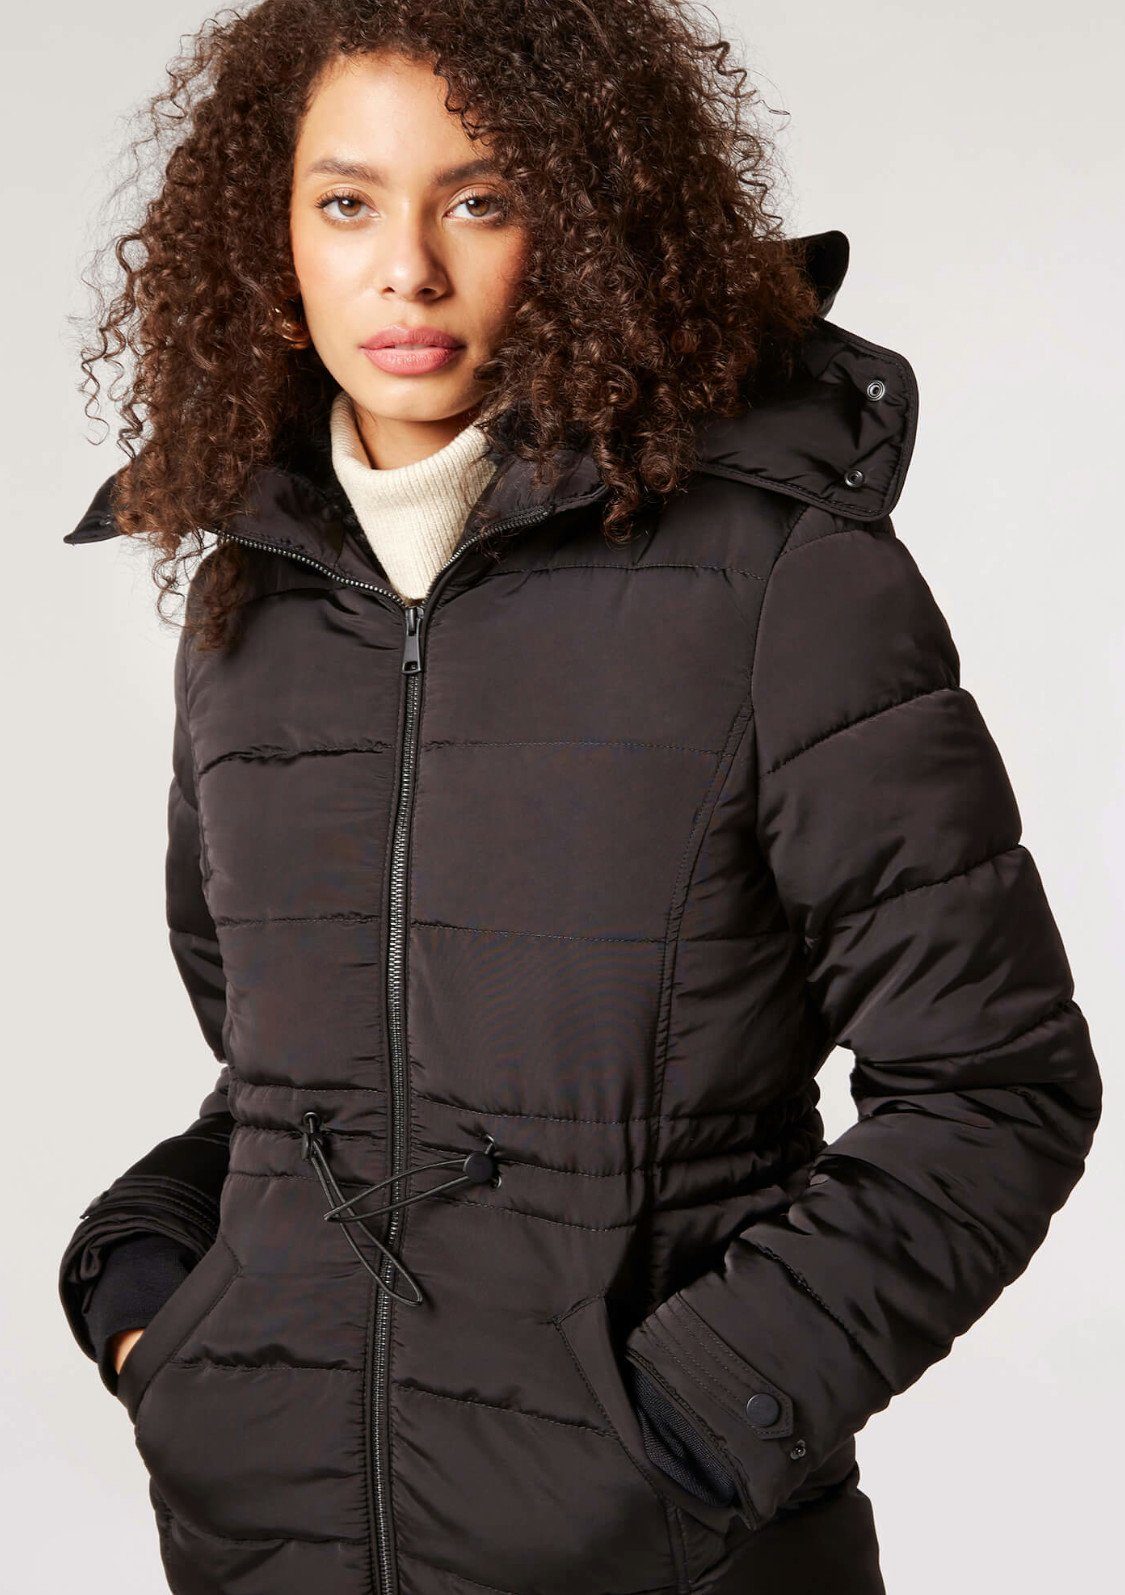 Apricot Winterjacke Fur Hood mit Lined abnehmbarer Kapuze abnehmbarer schwarz Puffer (1-St., Rem mit Kapuze) Jacket